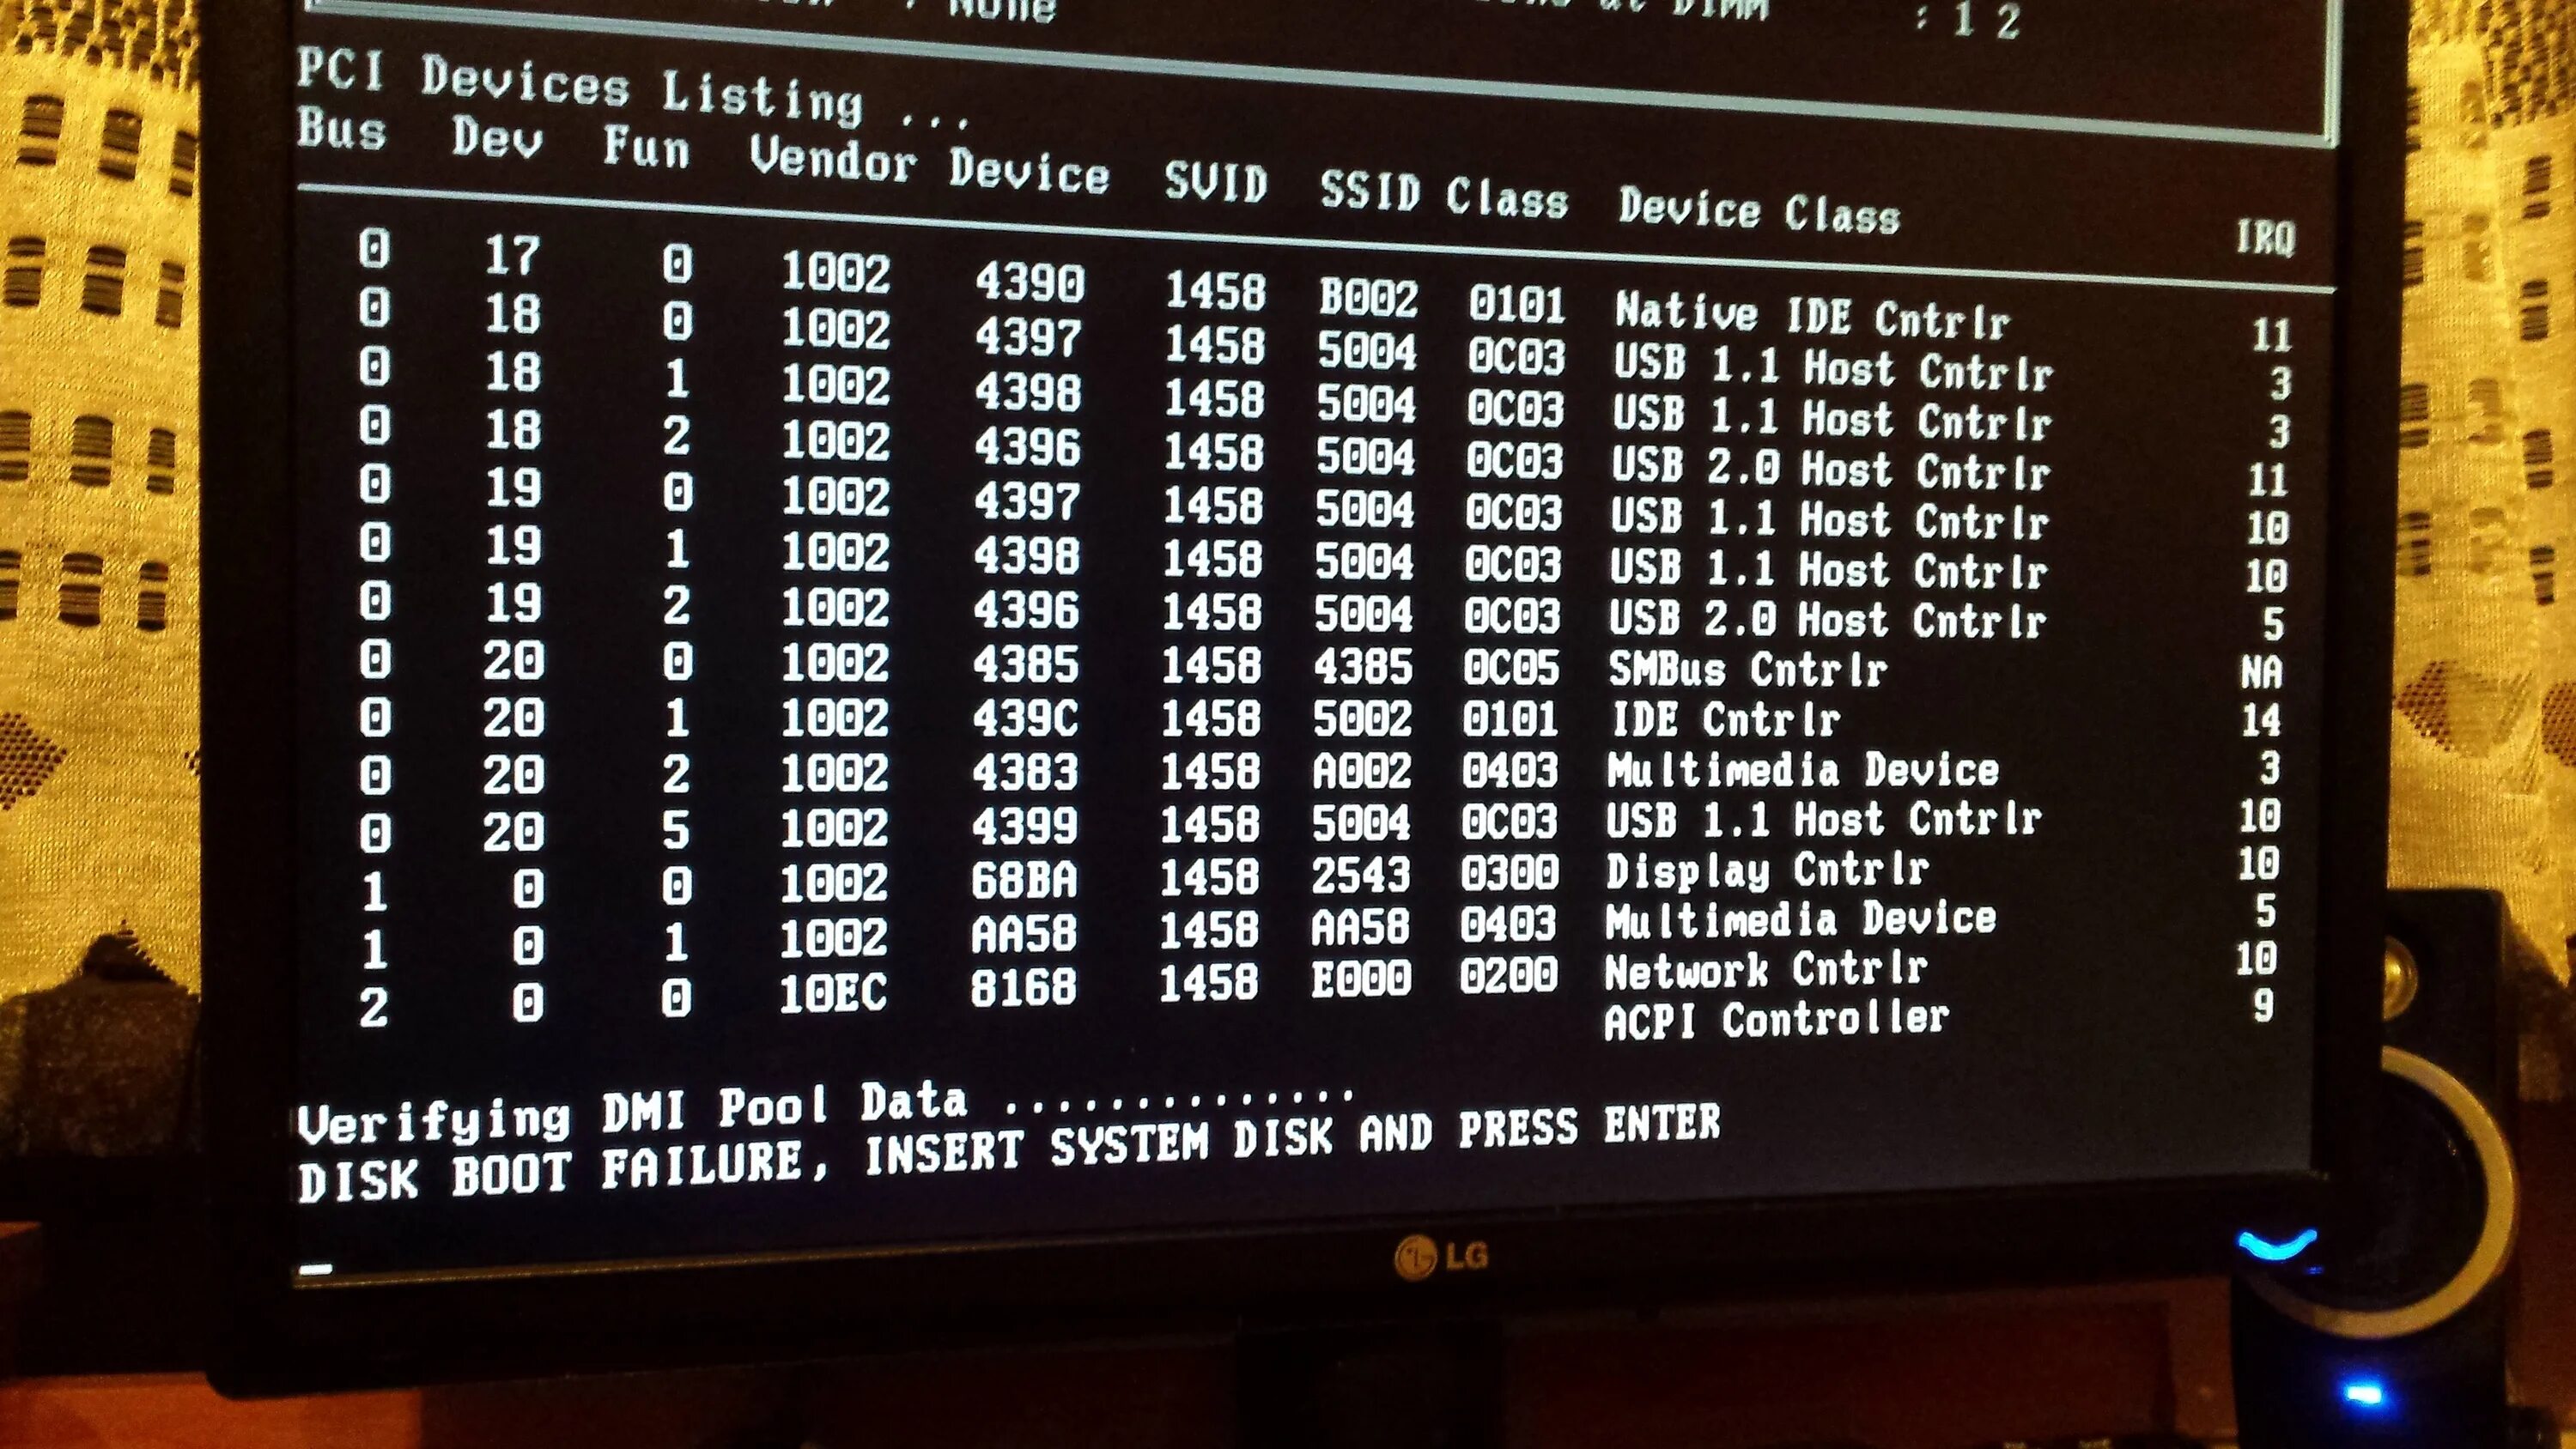 Dmi pool data. Disk Boot failure Insert System Disk and Press enter что делать. Verifying DMI Pool data и дальше не грузит. PCI device listing. Verifying DMI Pool data память.